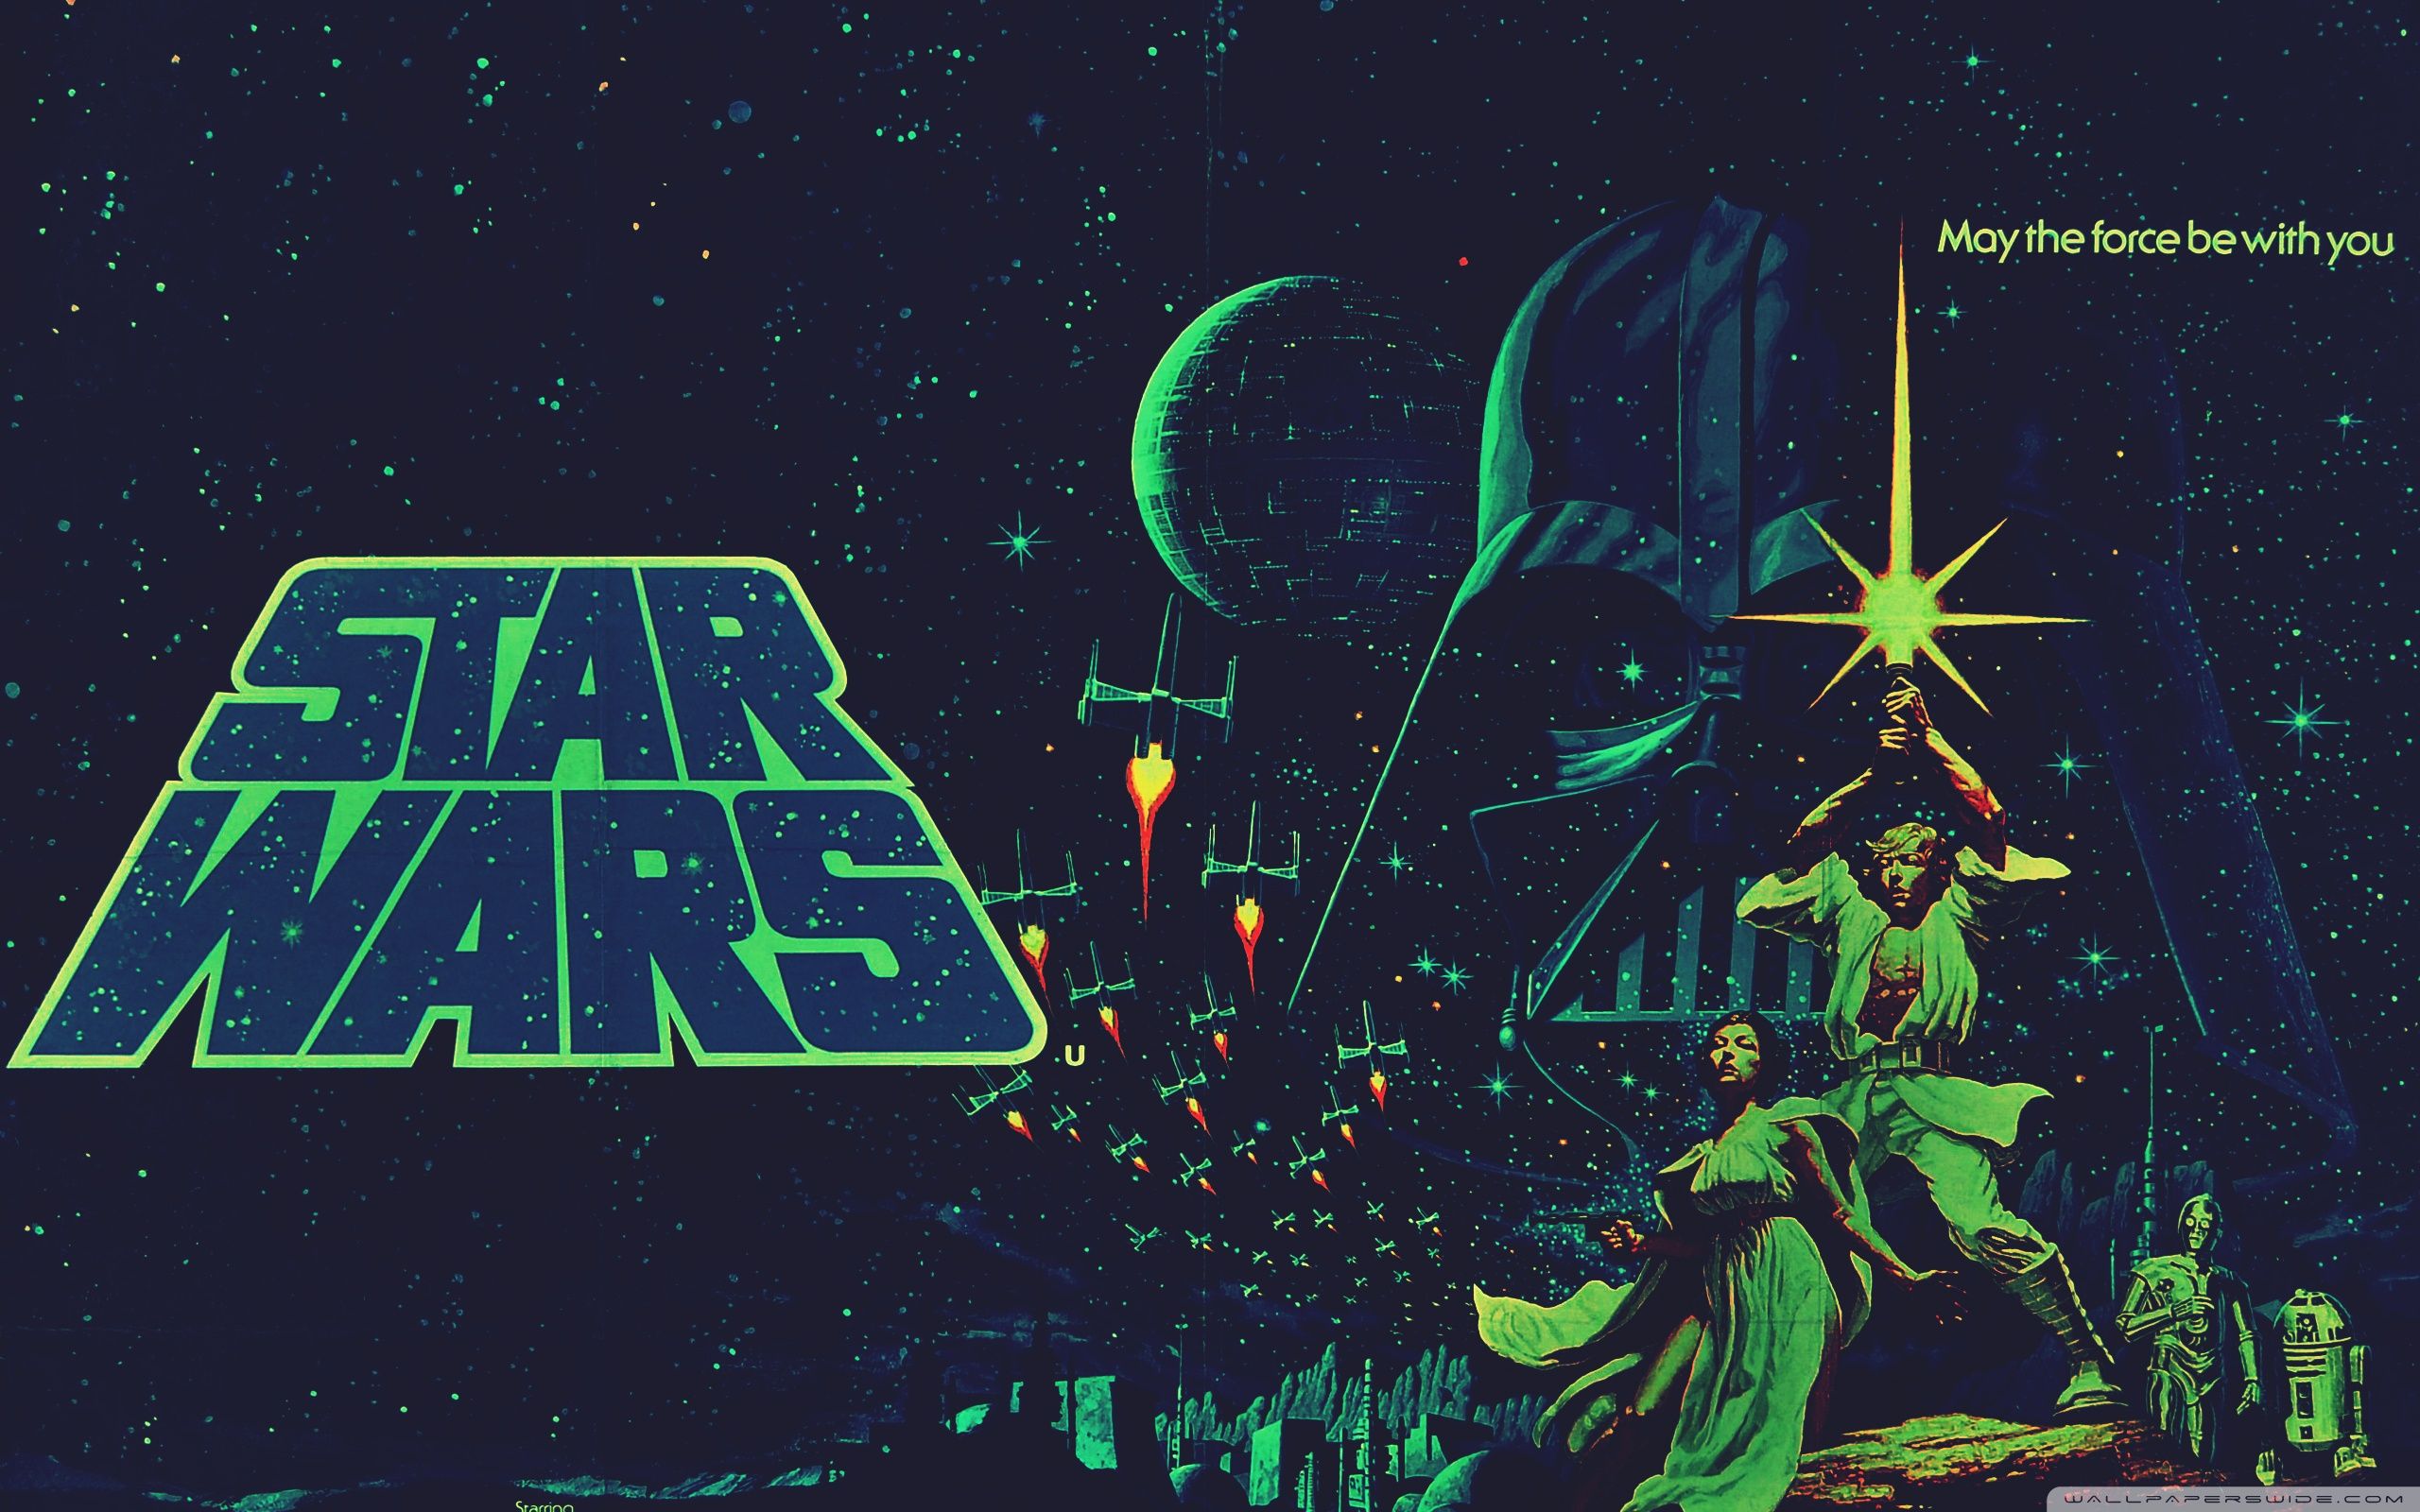 Star Wars Poster HD desktop wallpaper, High Definition